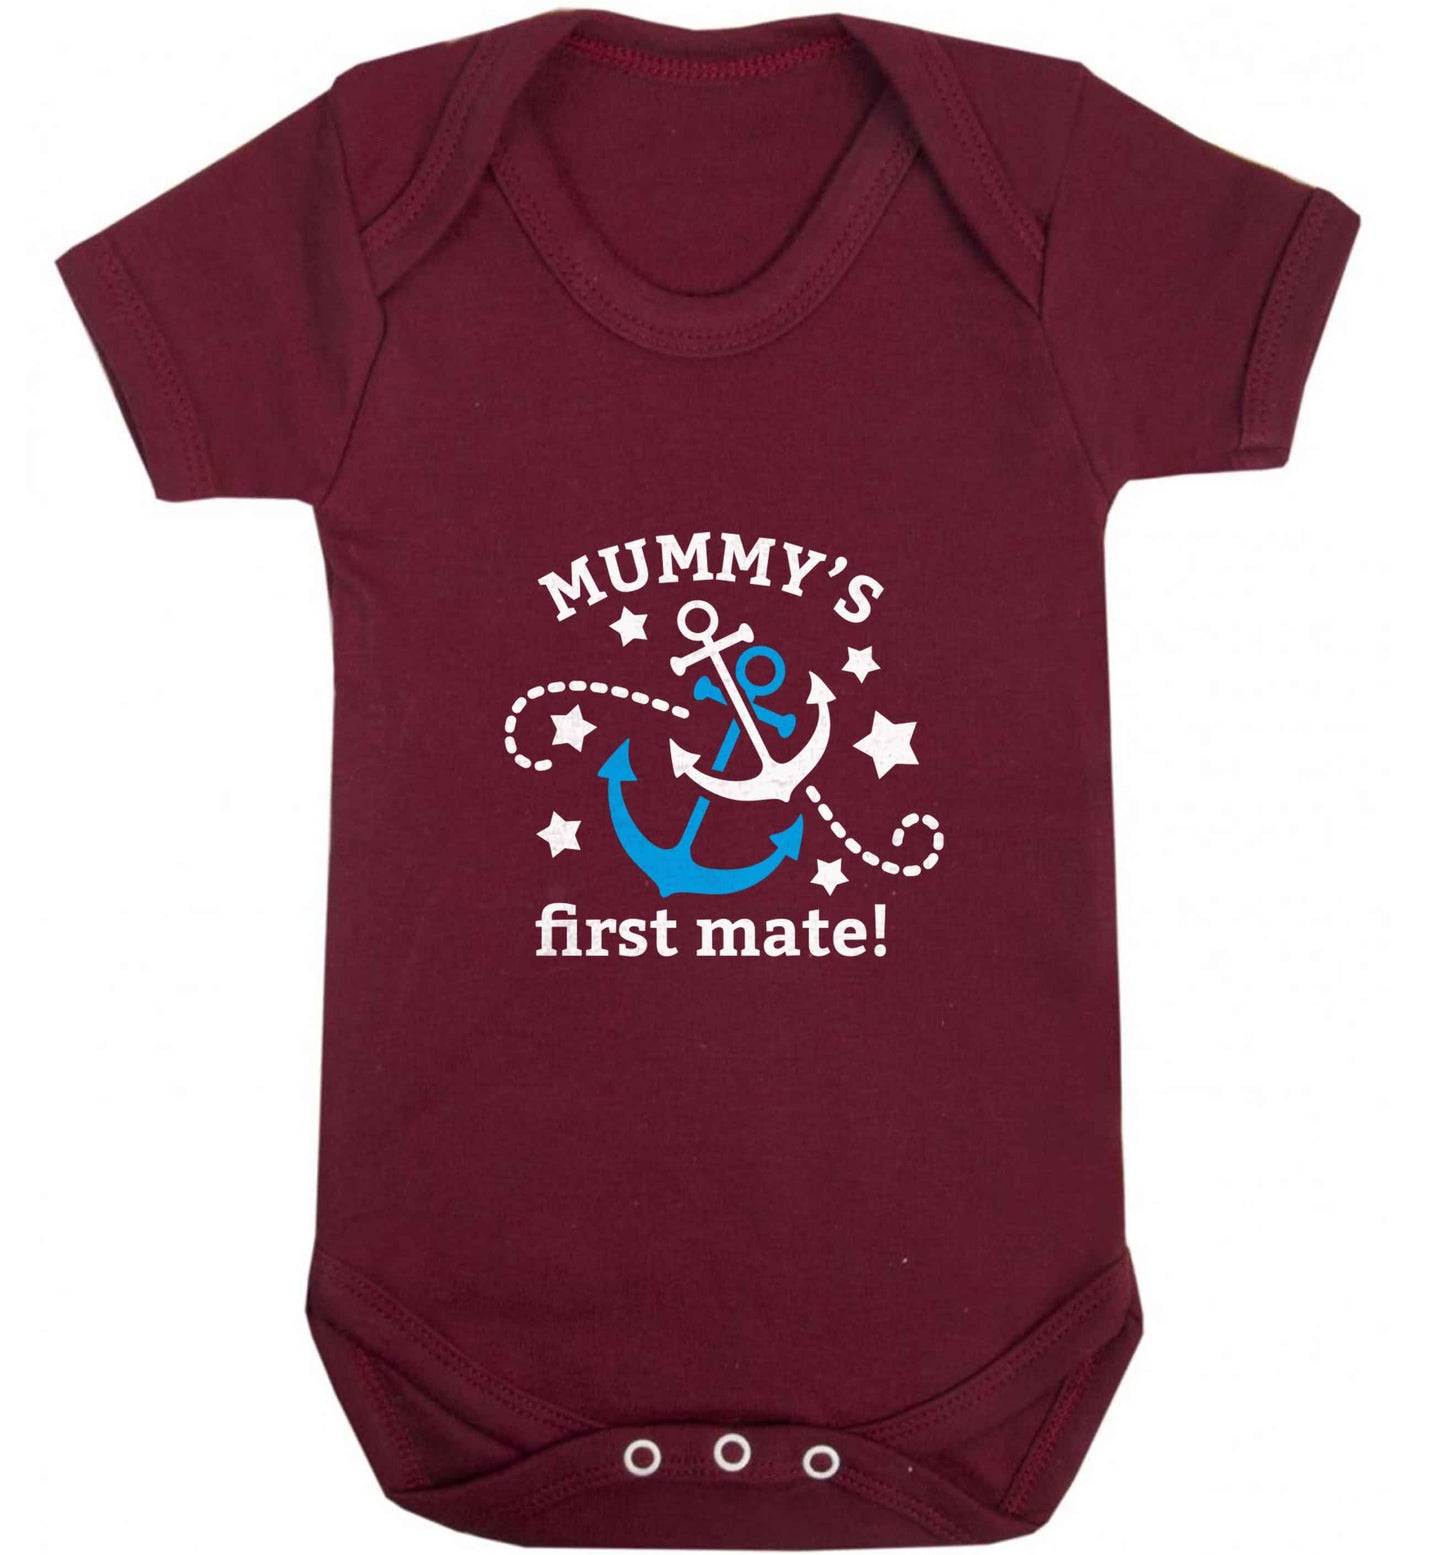 Mummy's First Mate baby vest maroon 18-24 months